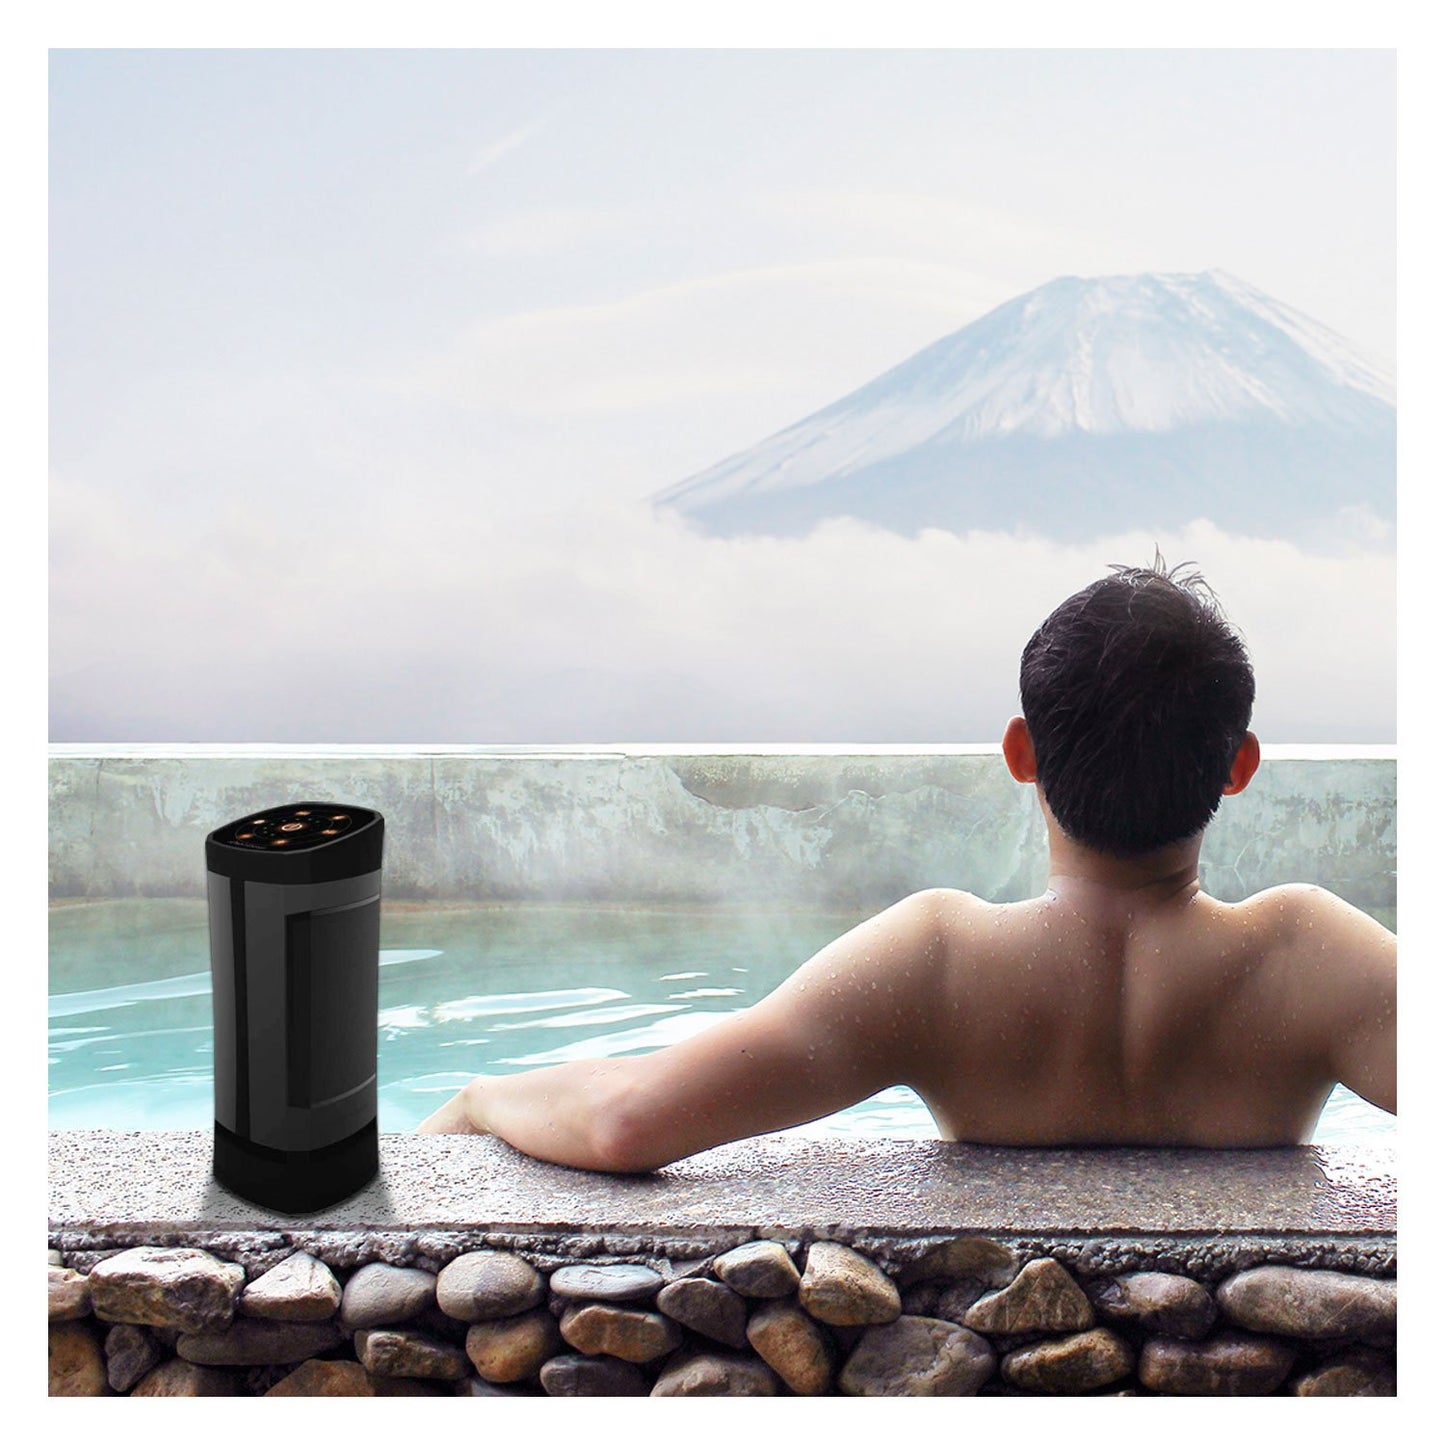 Soundcast VG3 Bluetooth Omni-Array Speaker with DSP - Kronos AV